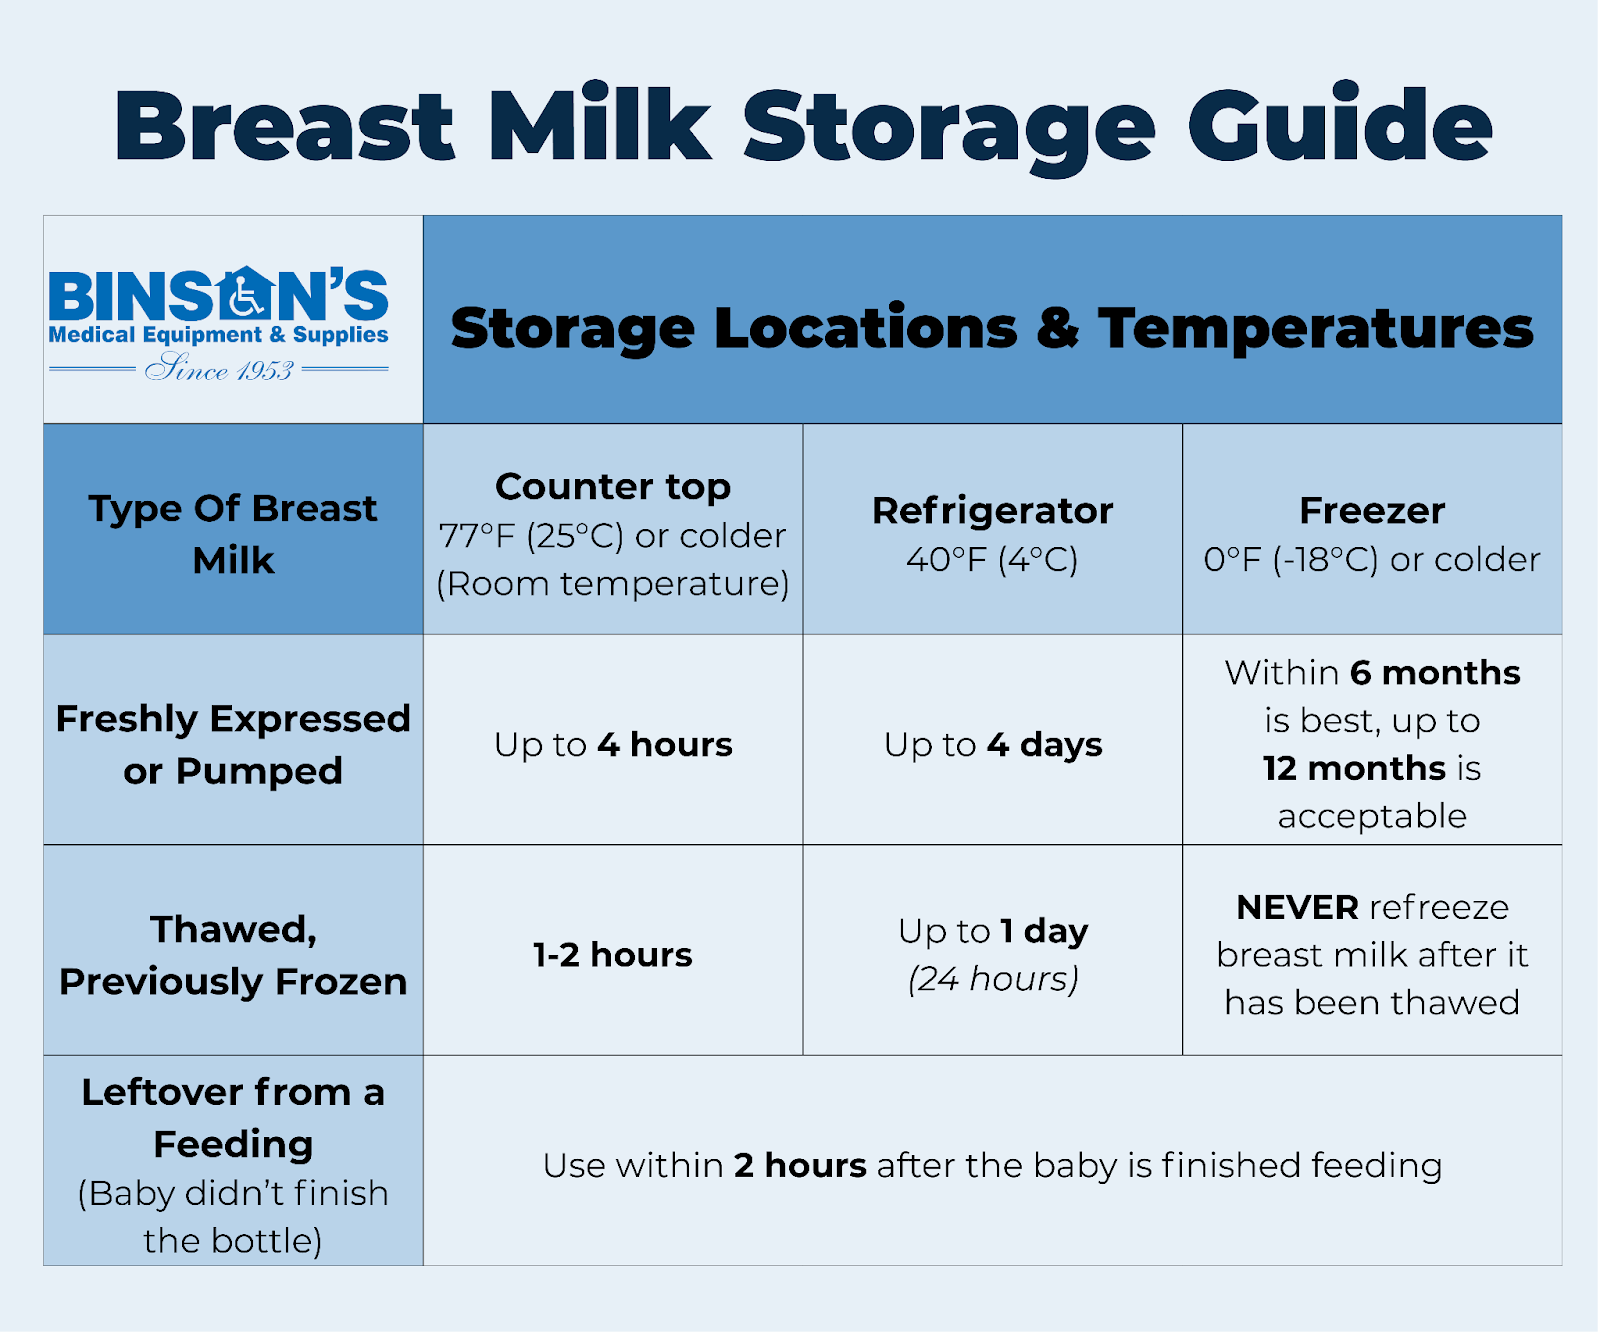 Breast milk storage guide image